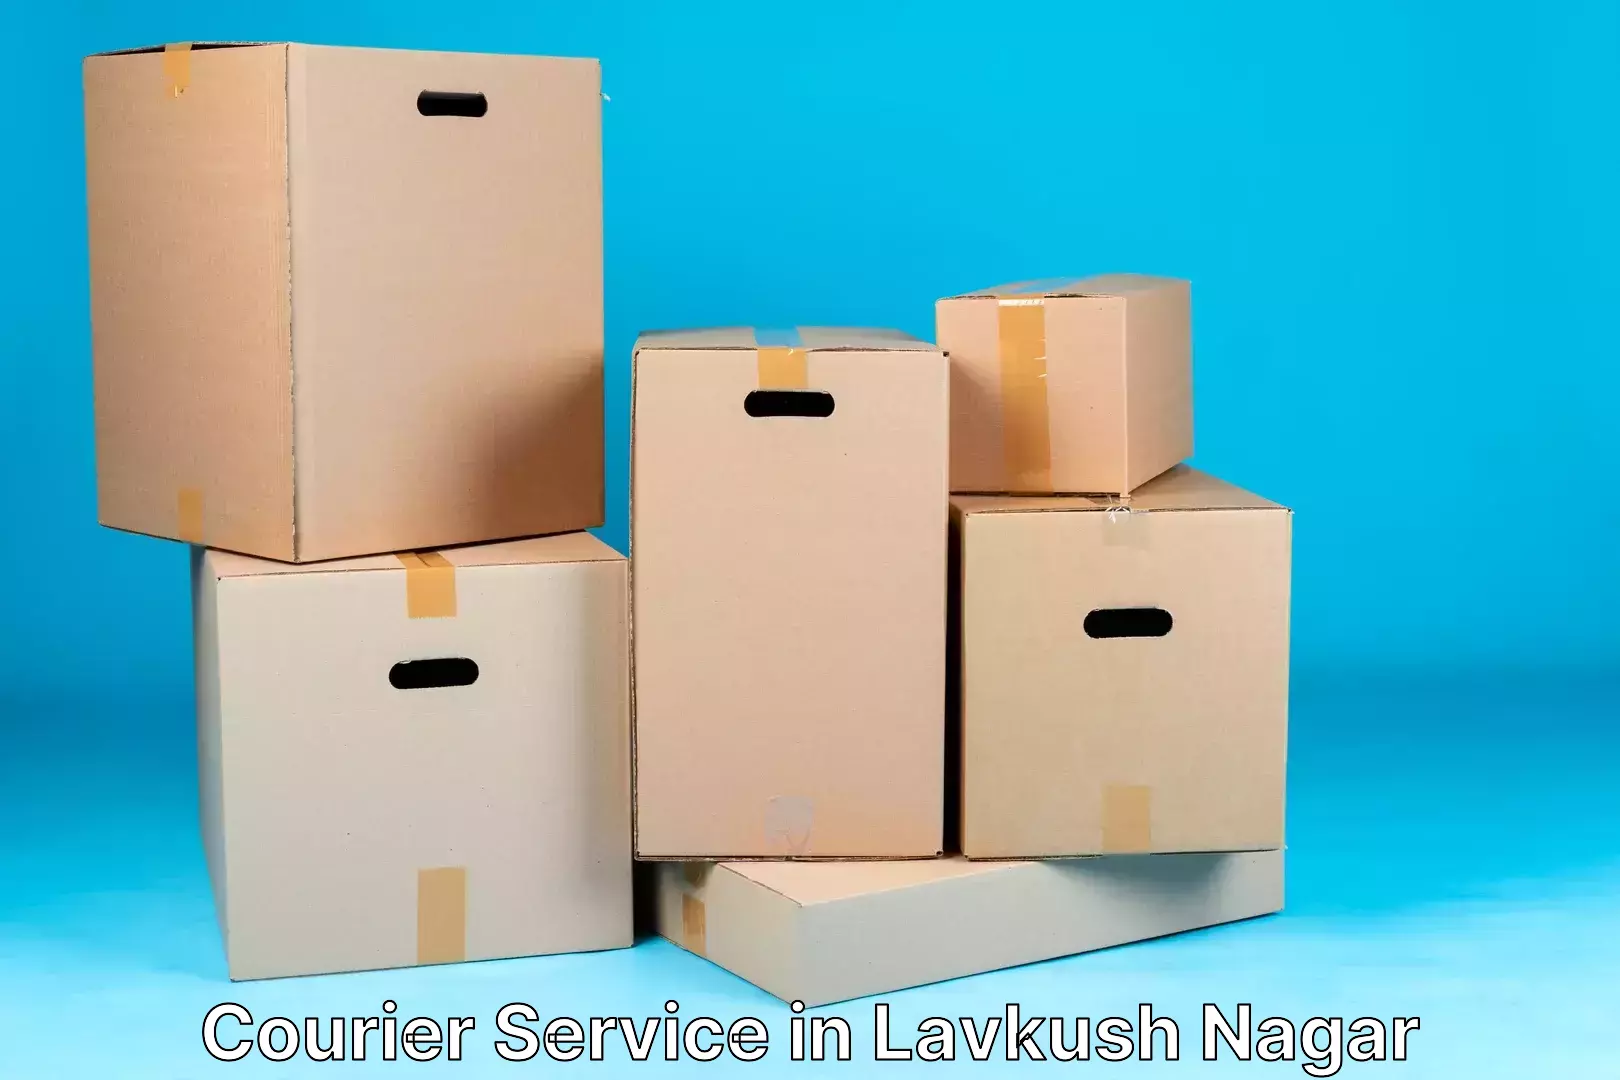 Global logistics network in Lavkush Nagar